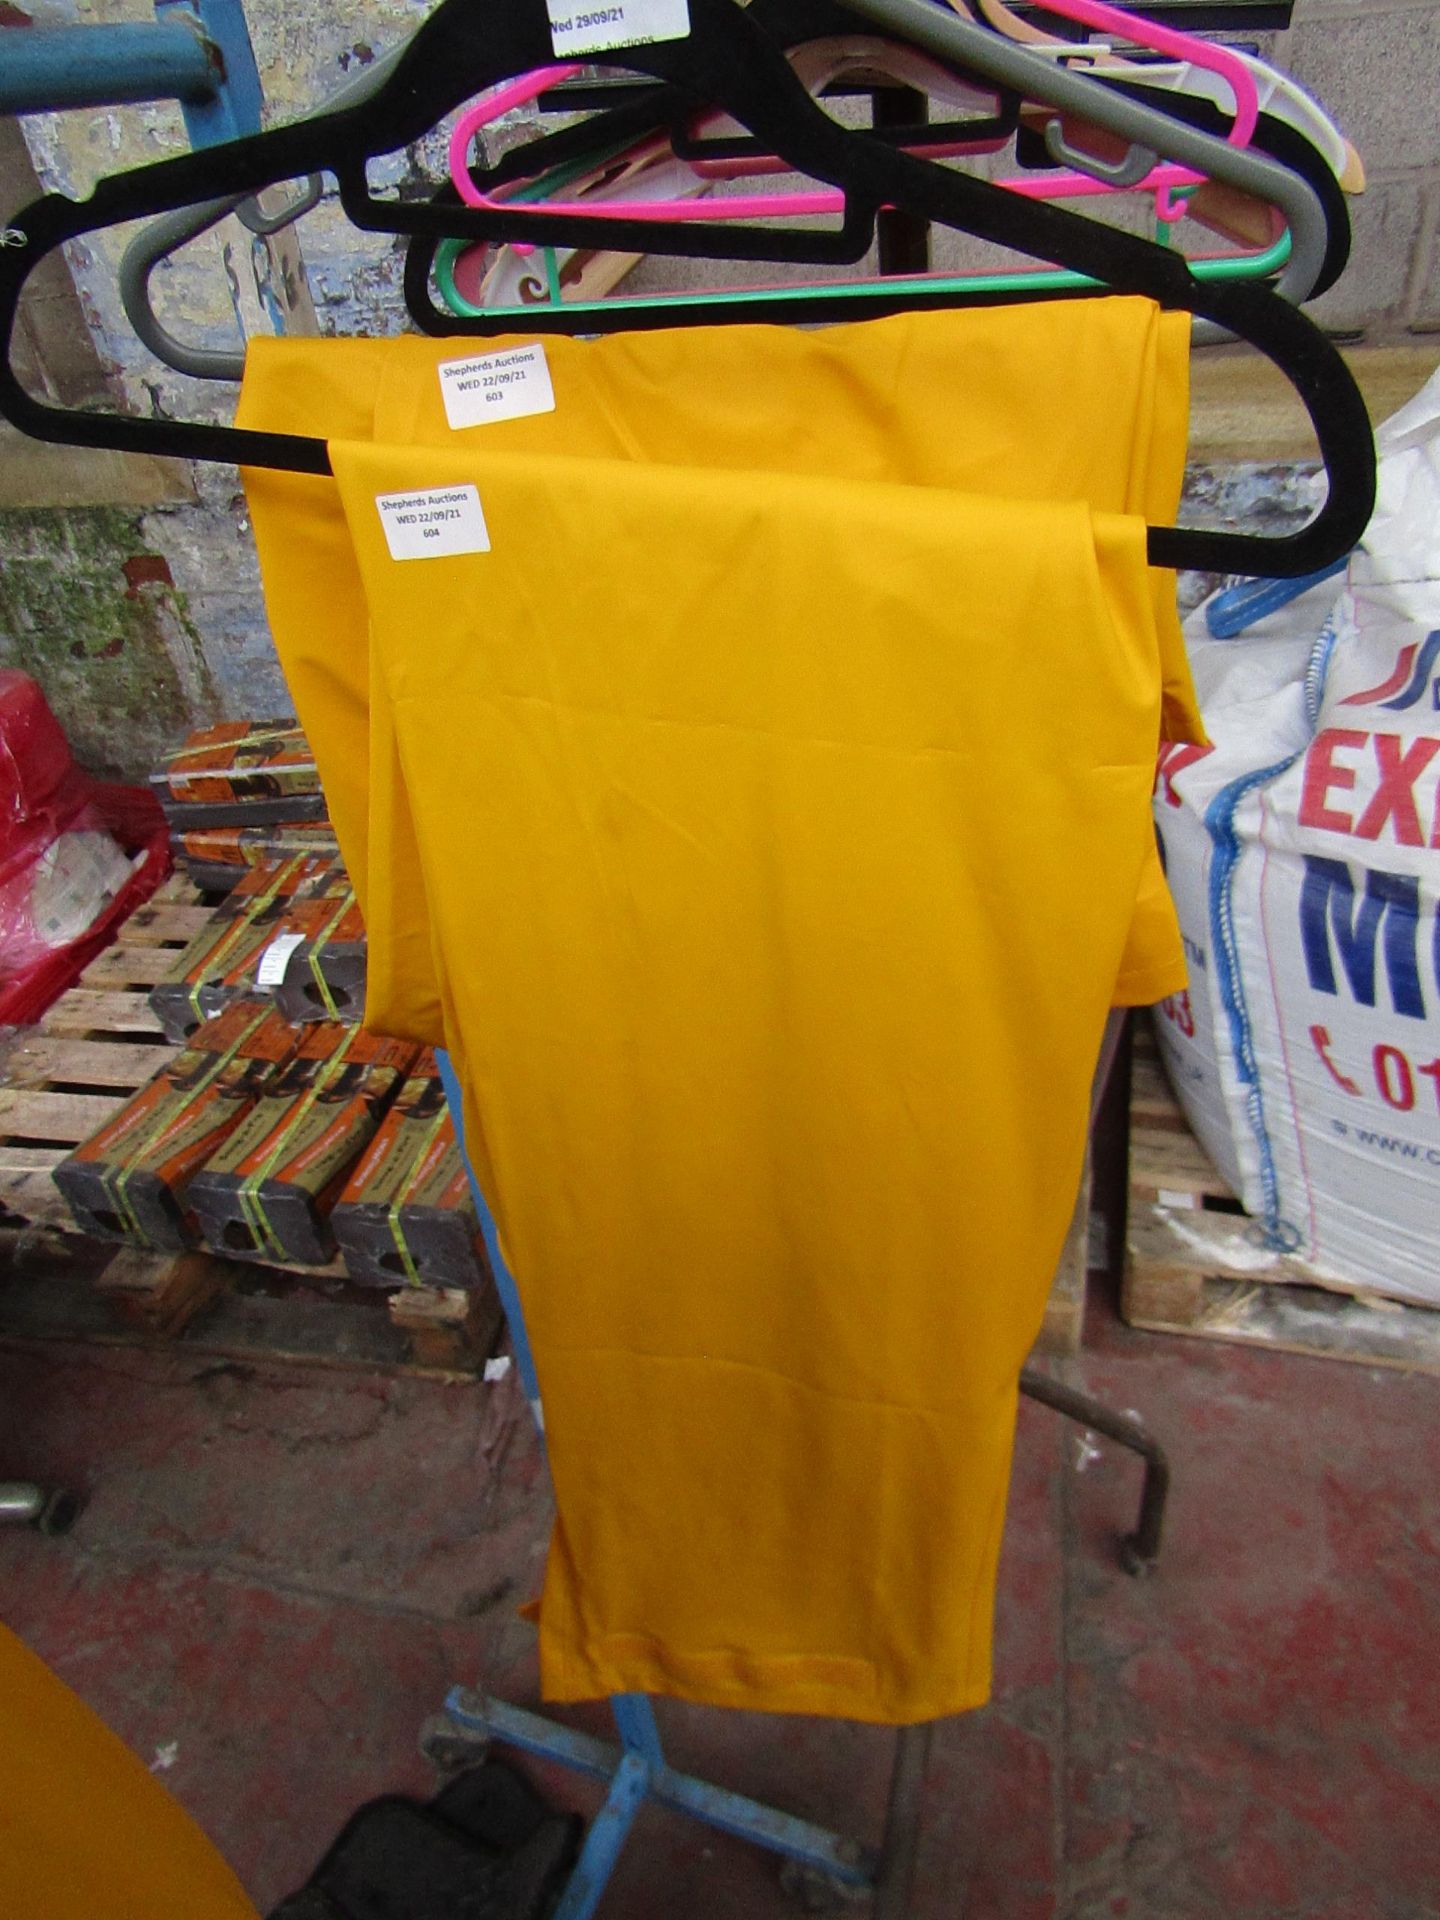 Unbrandd - Pvc Mustard Yellow Bib' n Brace - Size Large - Unused.